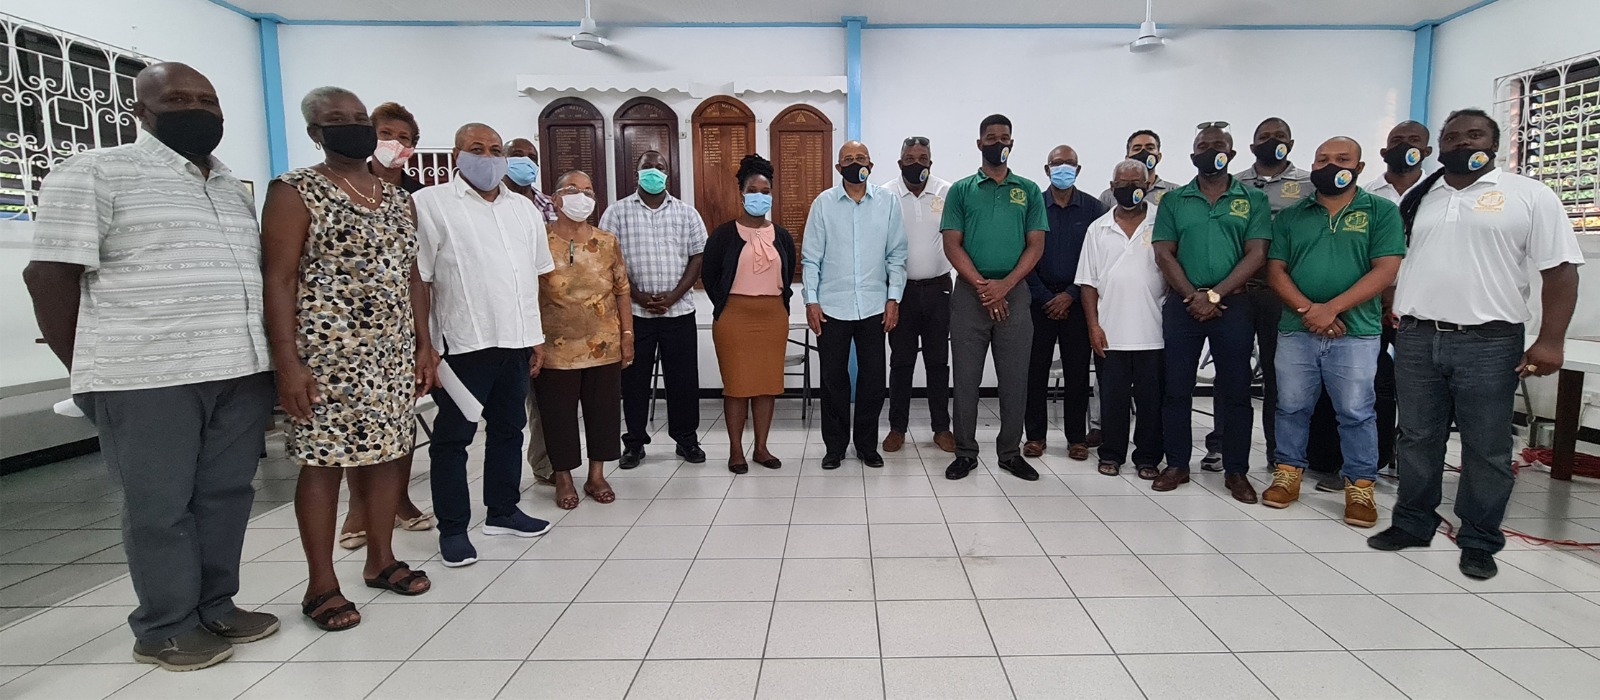 Dominica - Local Freemason lodge donates to 12 charities